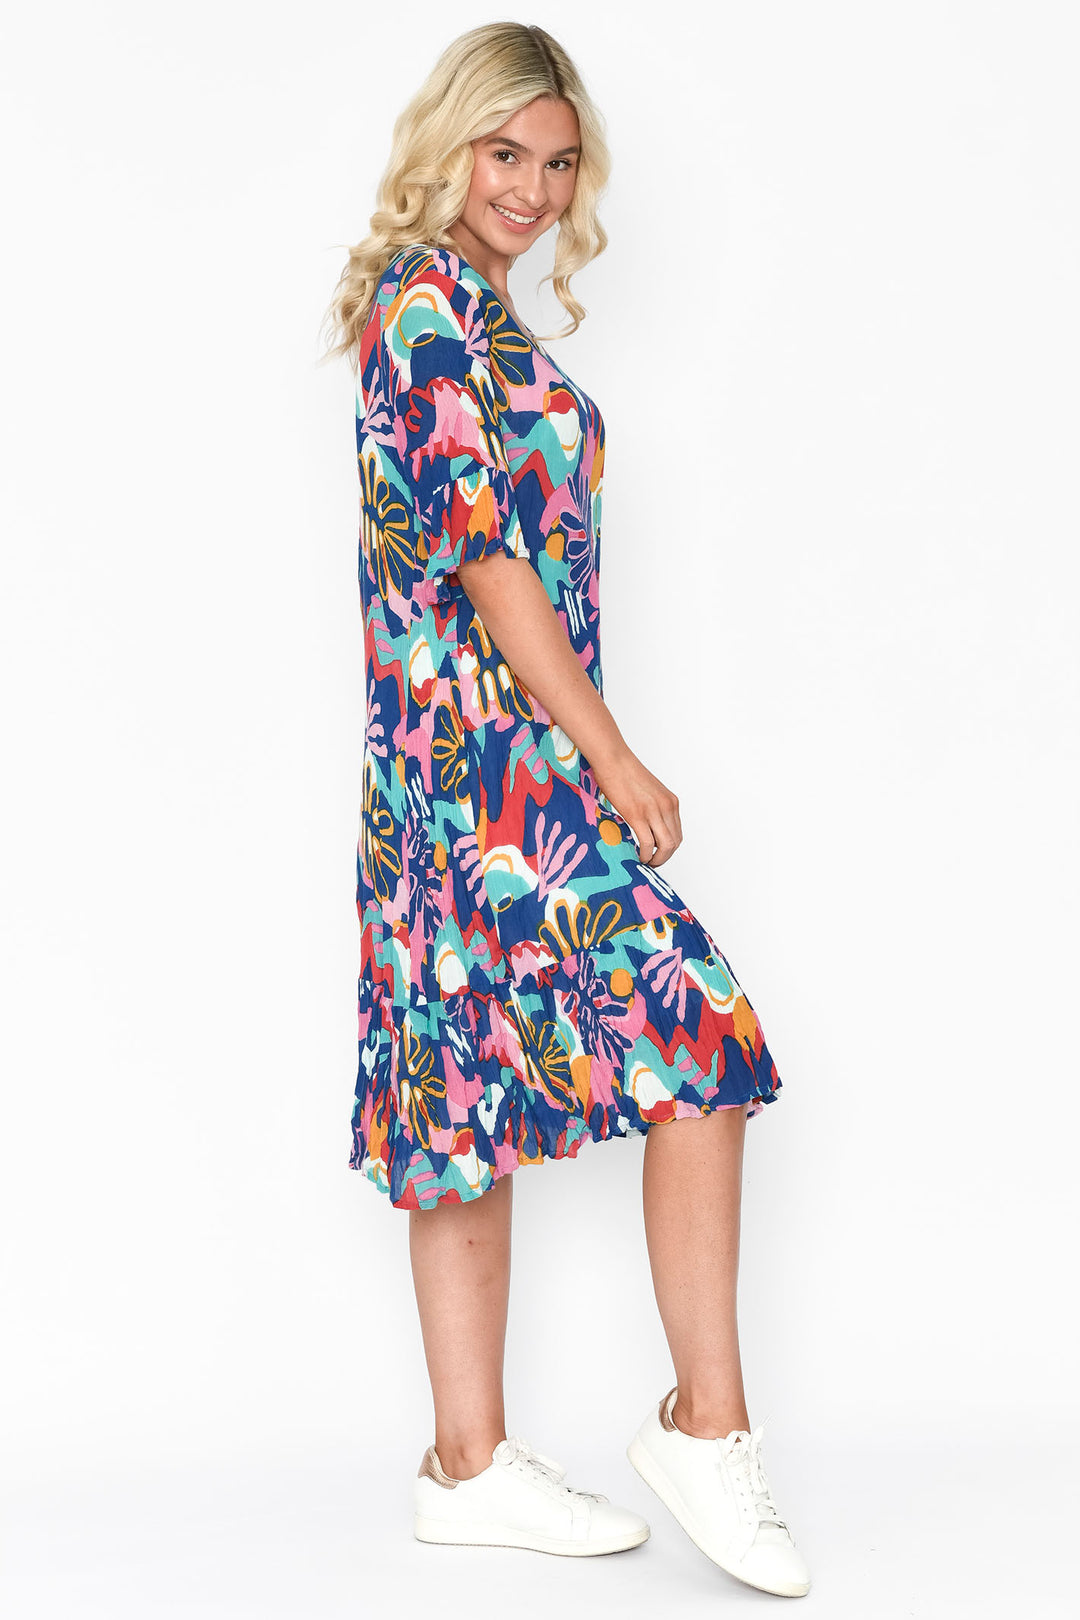 One Summer DW2F Jessica Cobalt Tropical Print Dress - Experience Boutique